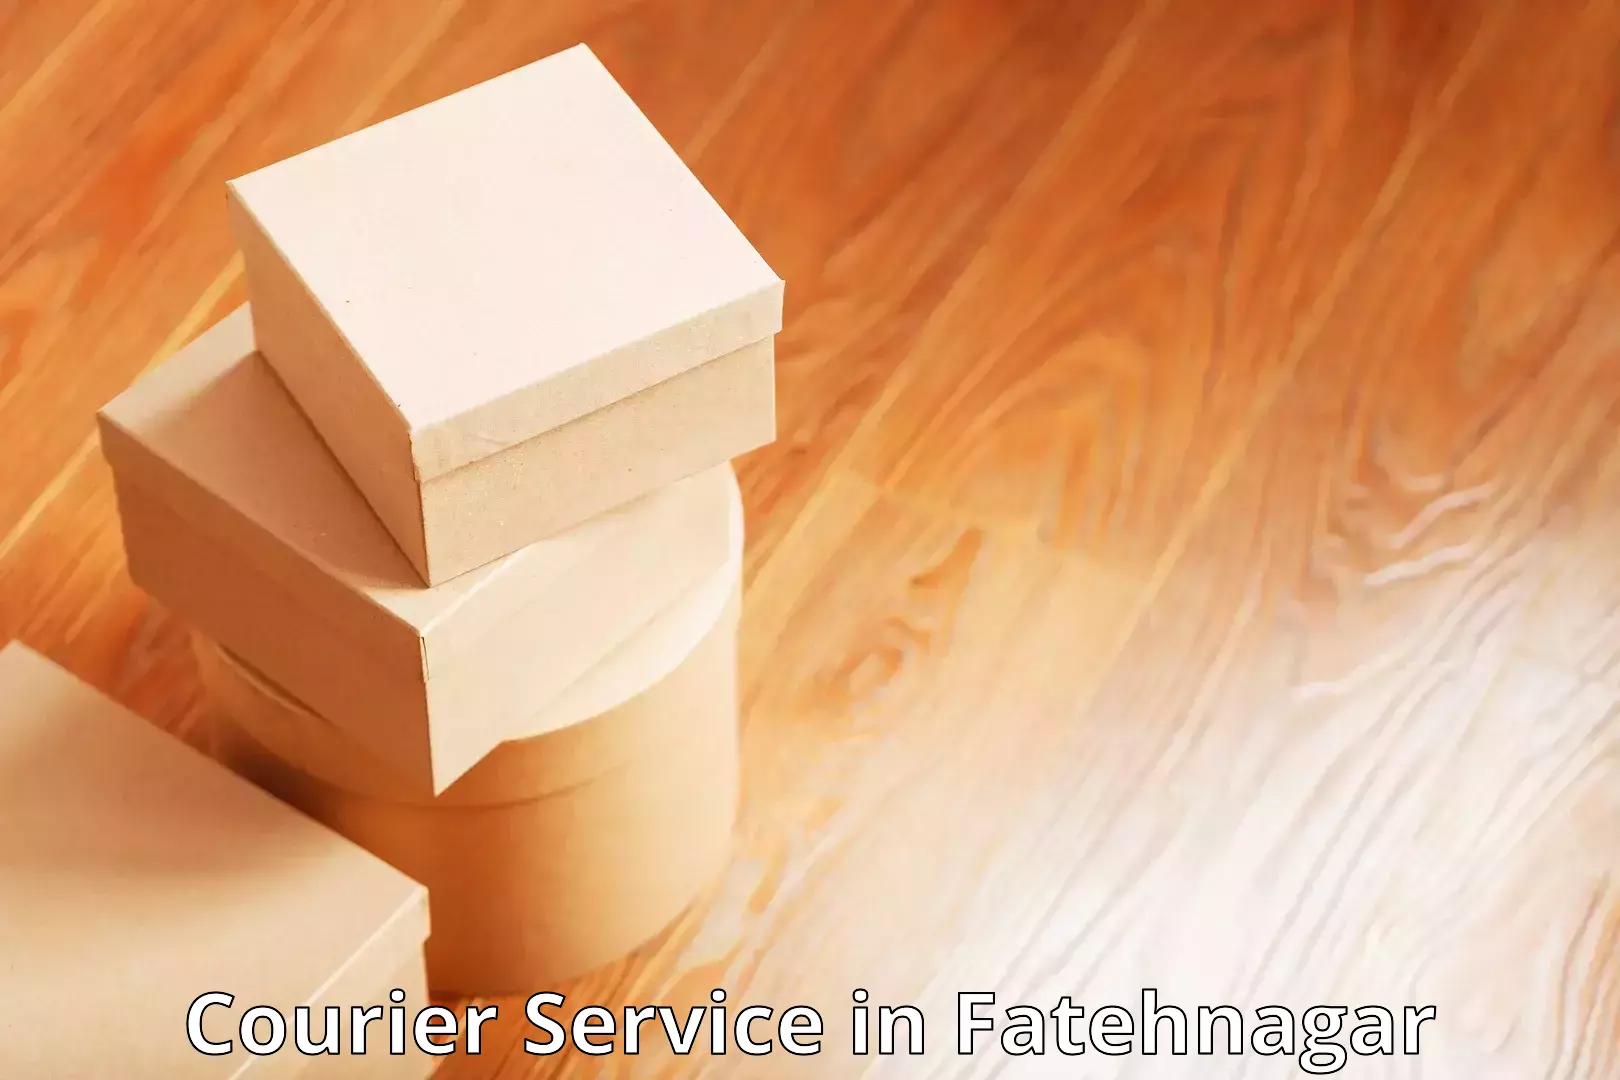 Courier service partnerships in Fatehnagar